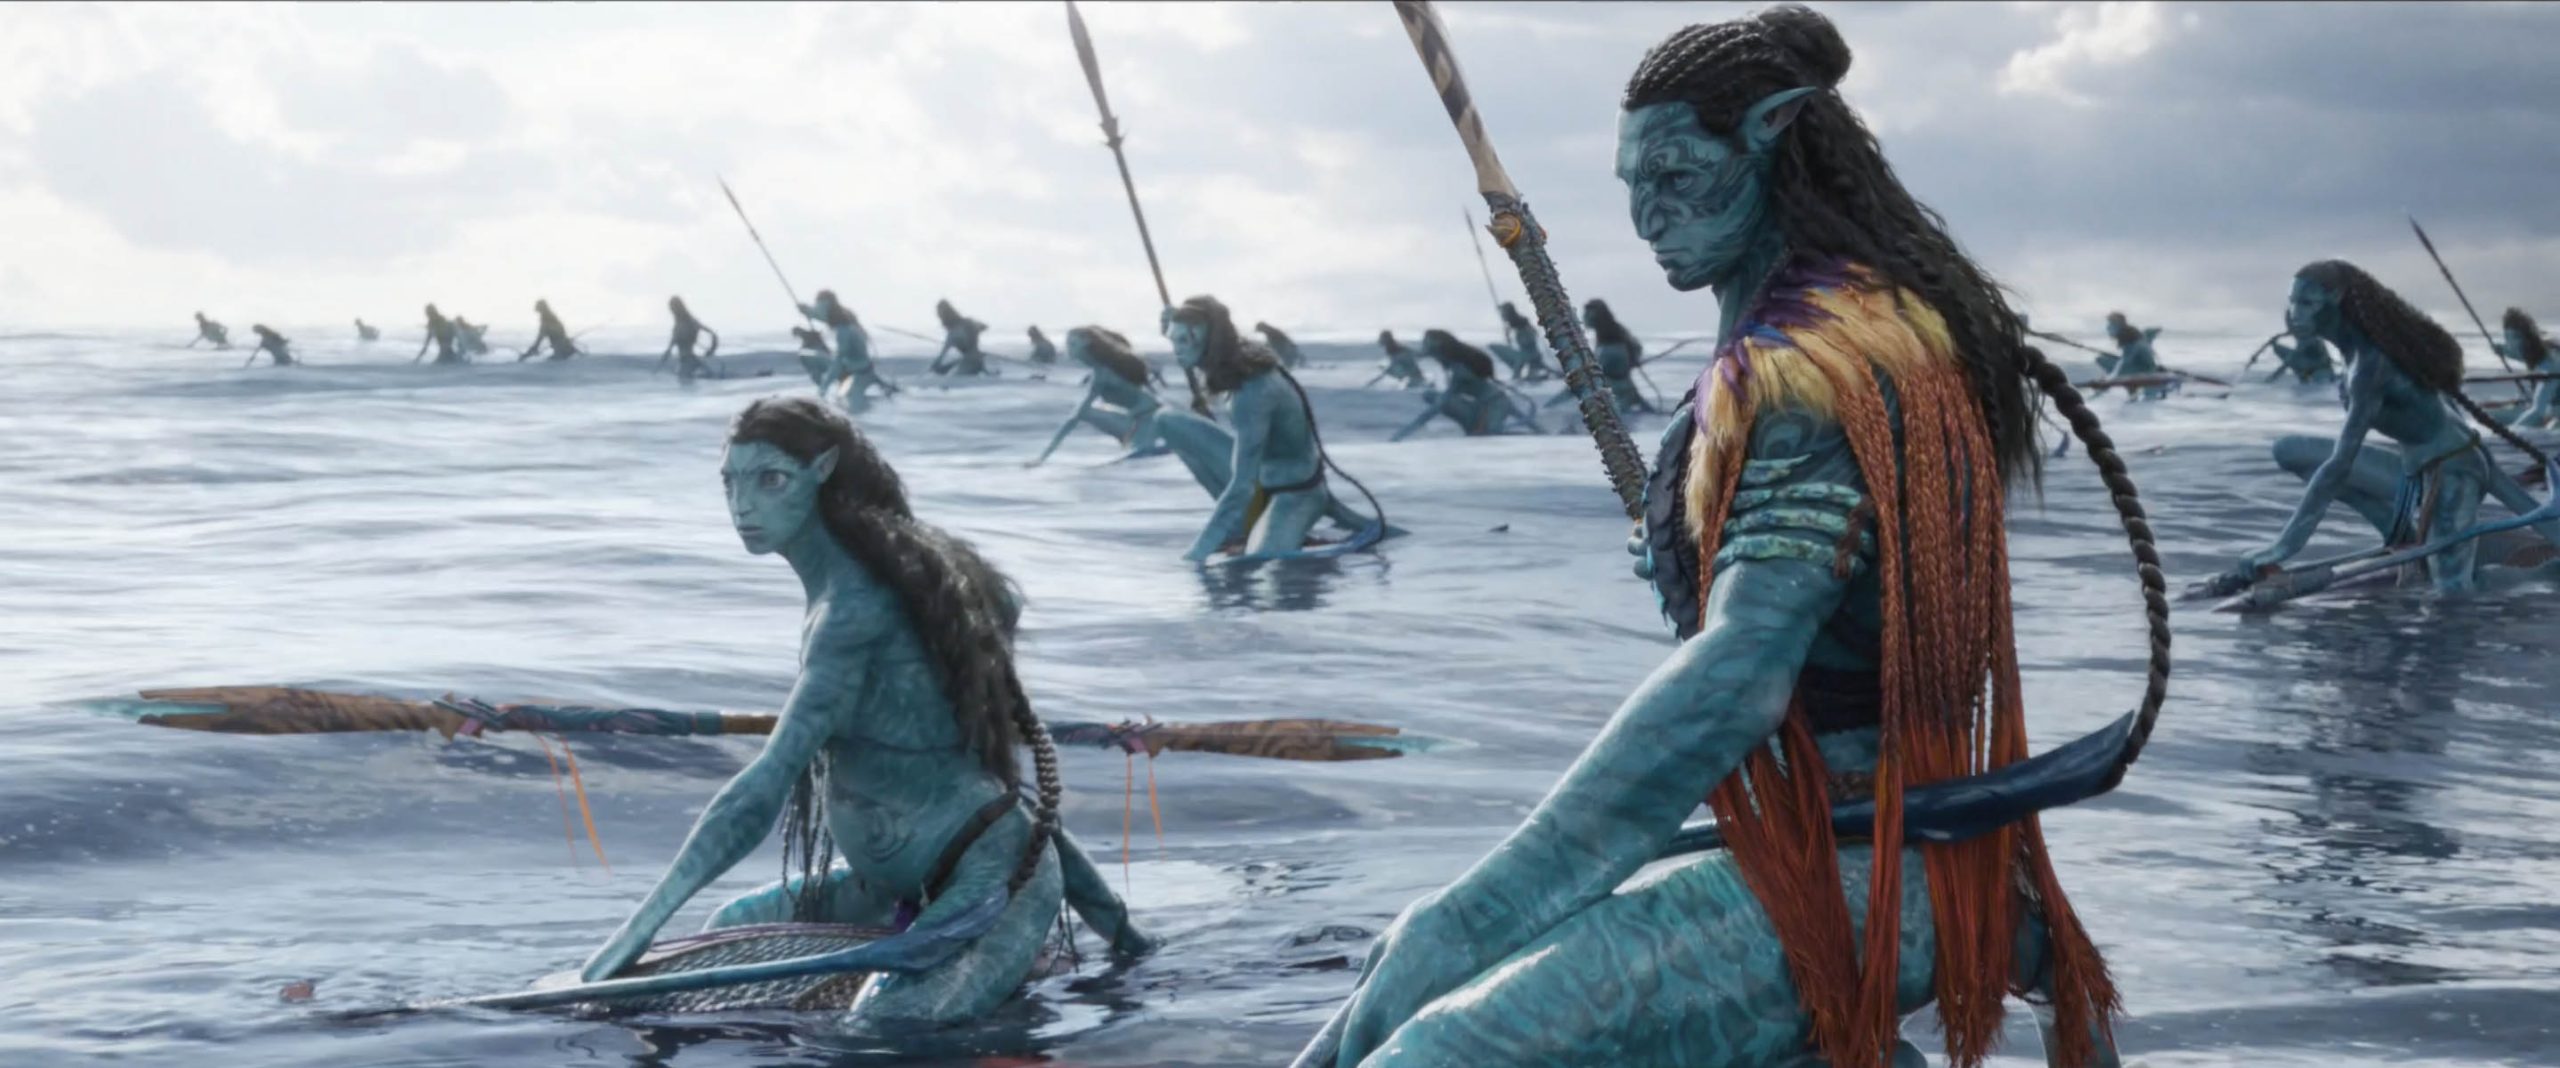 Avatar: The Way of Water movie still